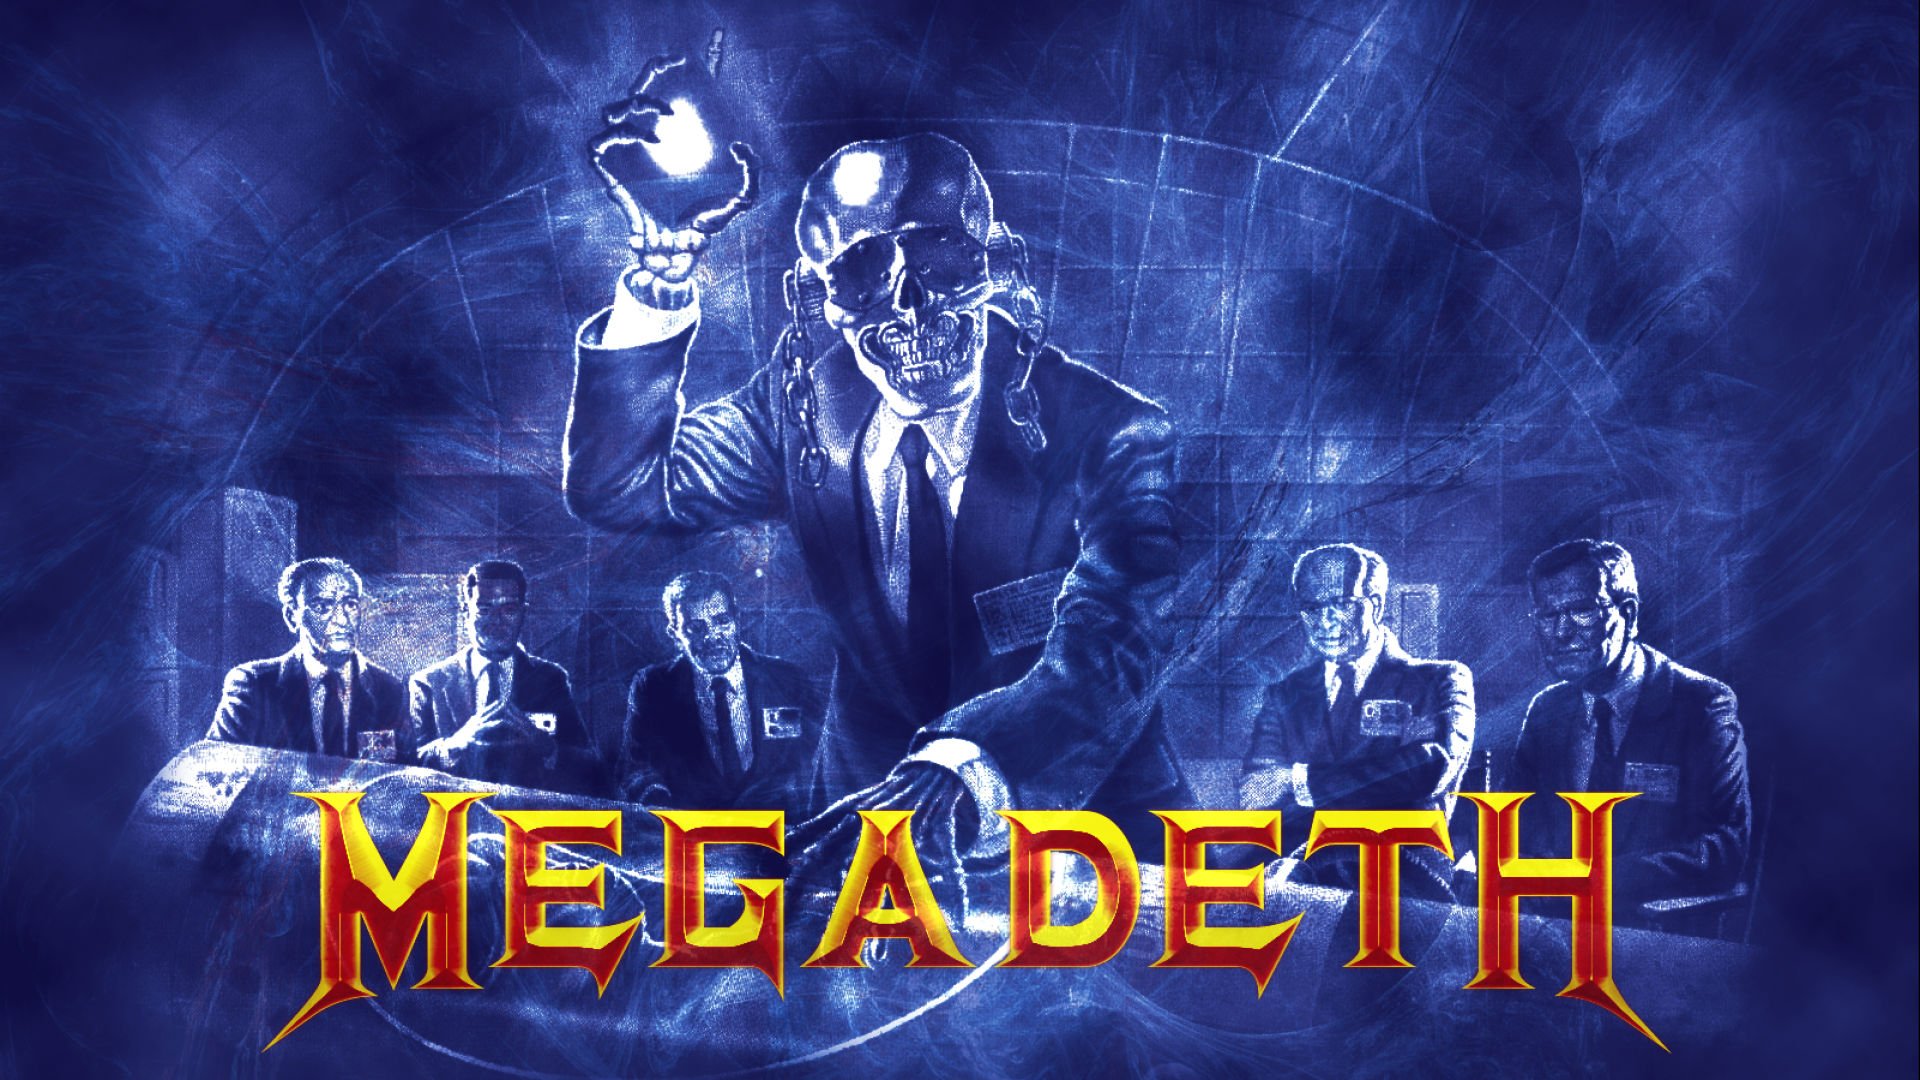 Megadeth rust in peace polaris текст фото 103